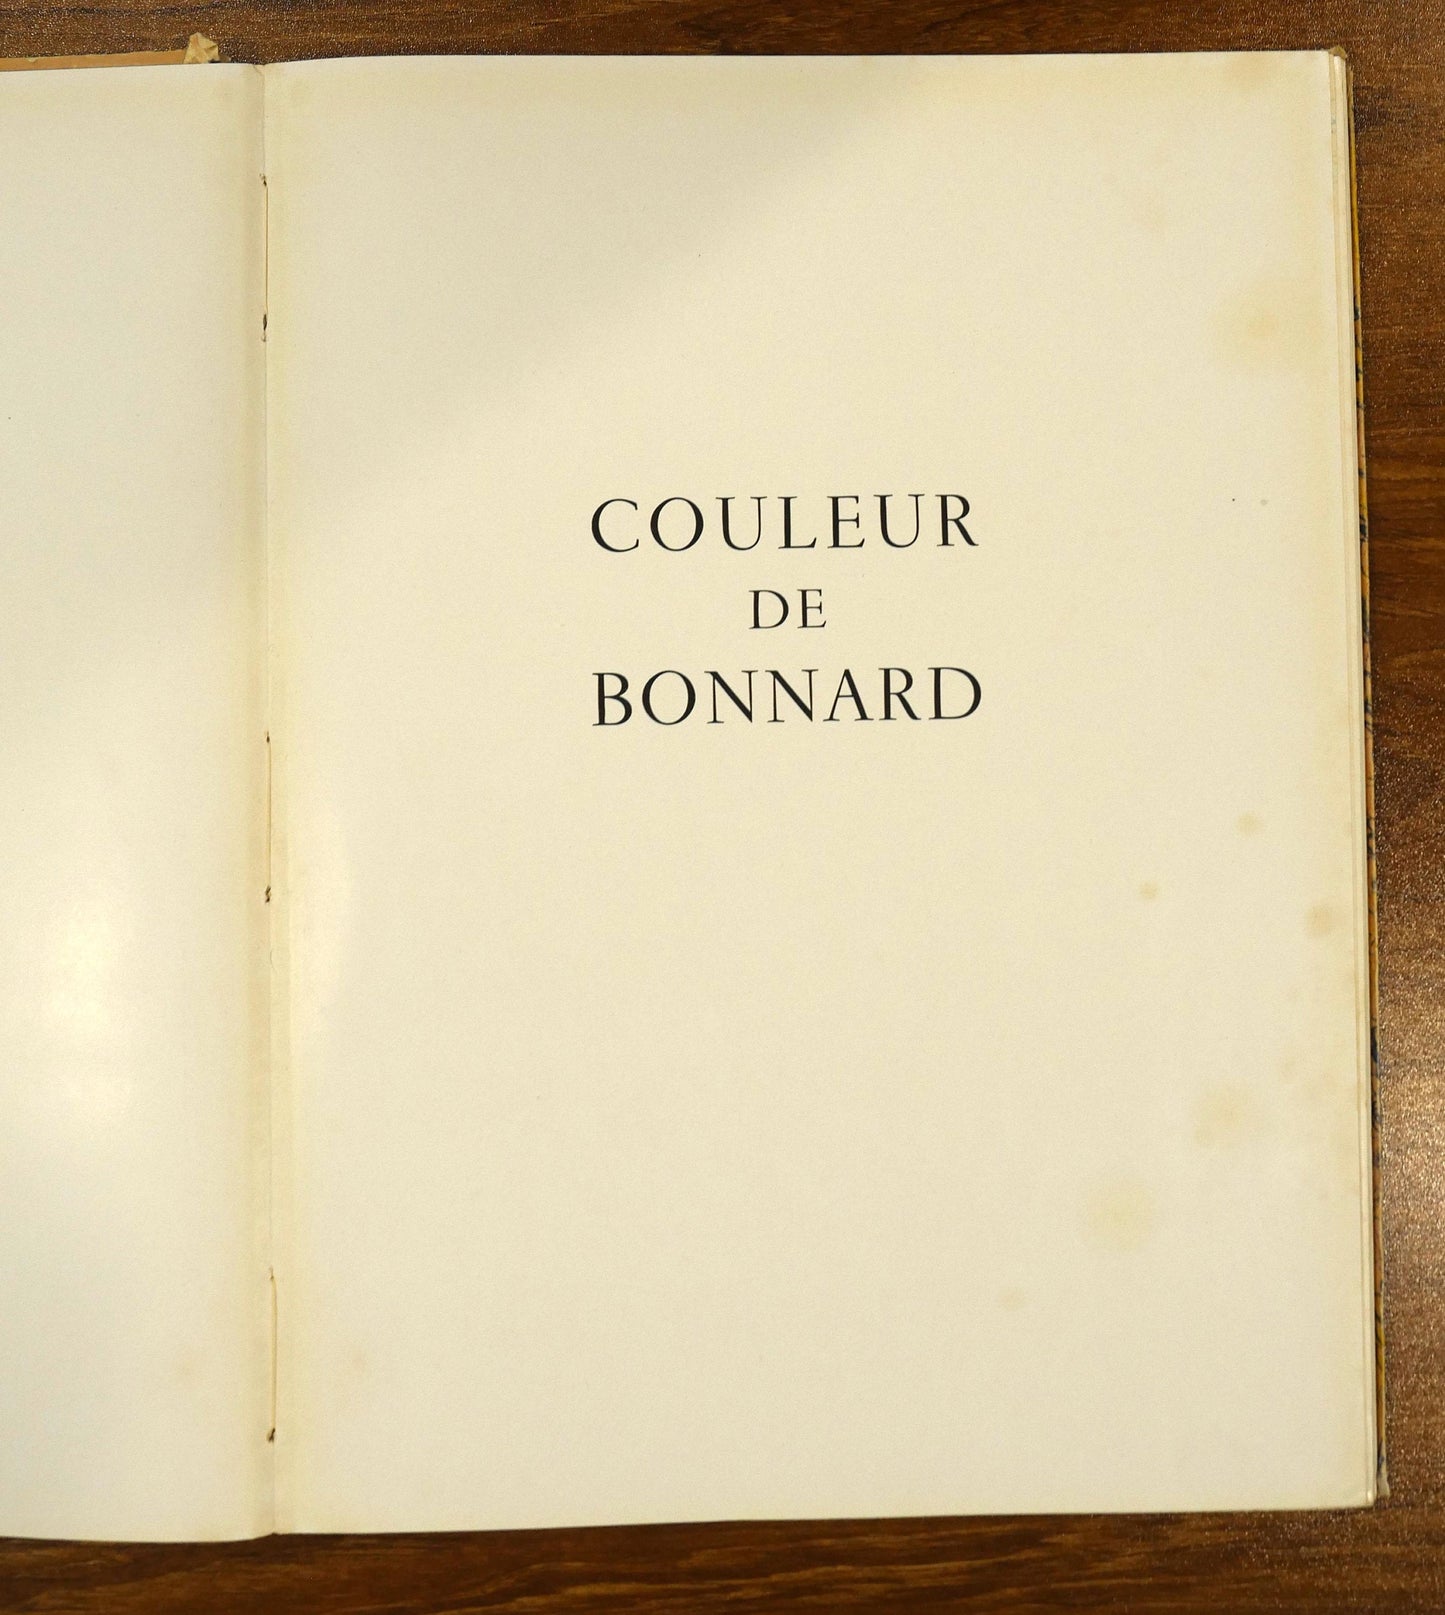 Pierre Bonnard Verve Vol 5 No 17-18 1947 includes the Le Soleil Original Lithograph edited by Teriade